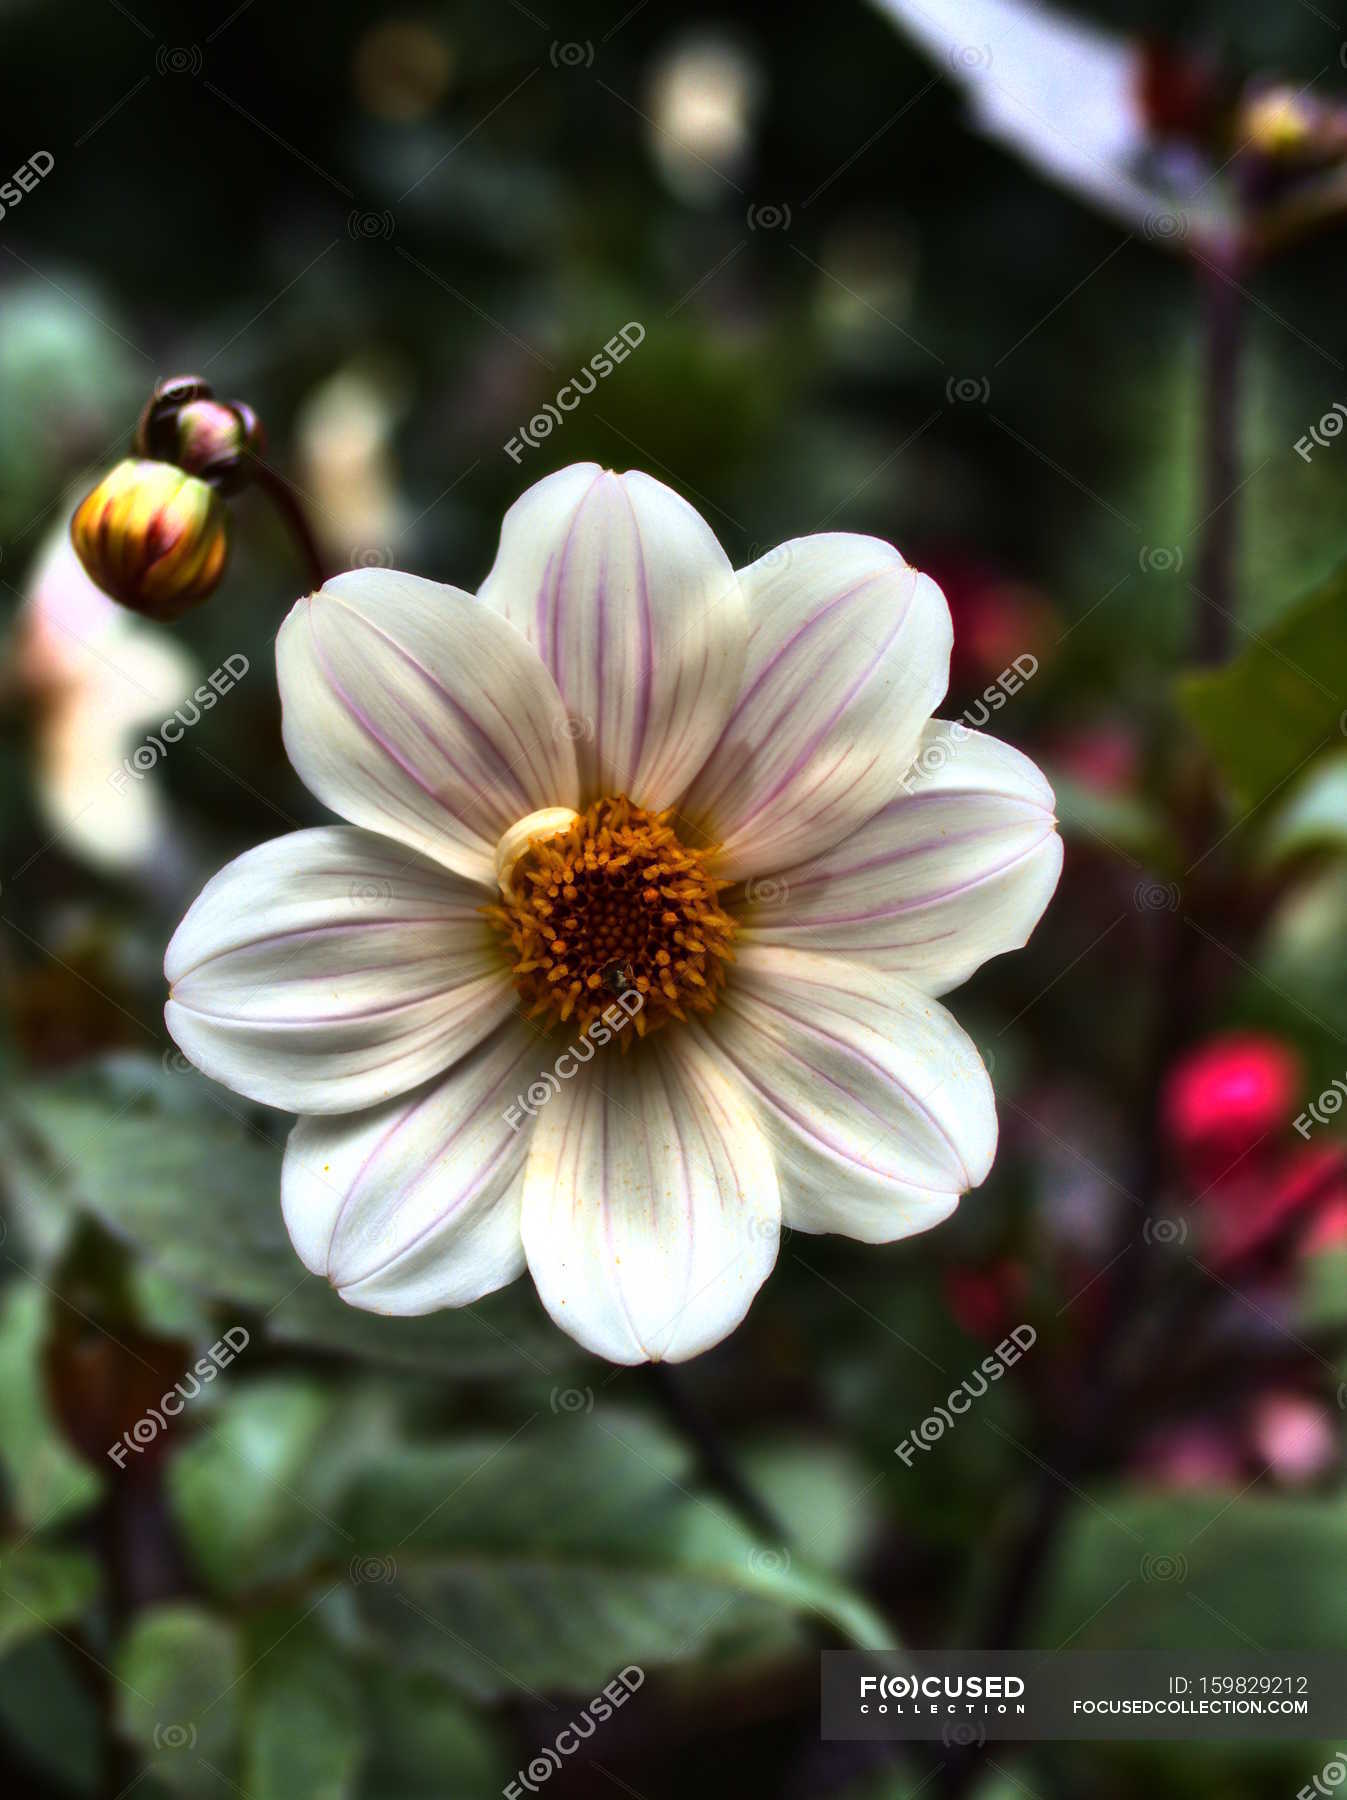 Blooming flower bud — Stock Photo | #159829212